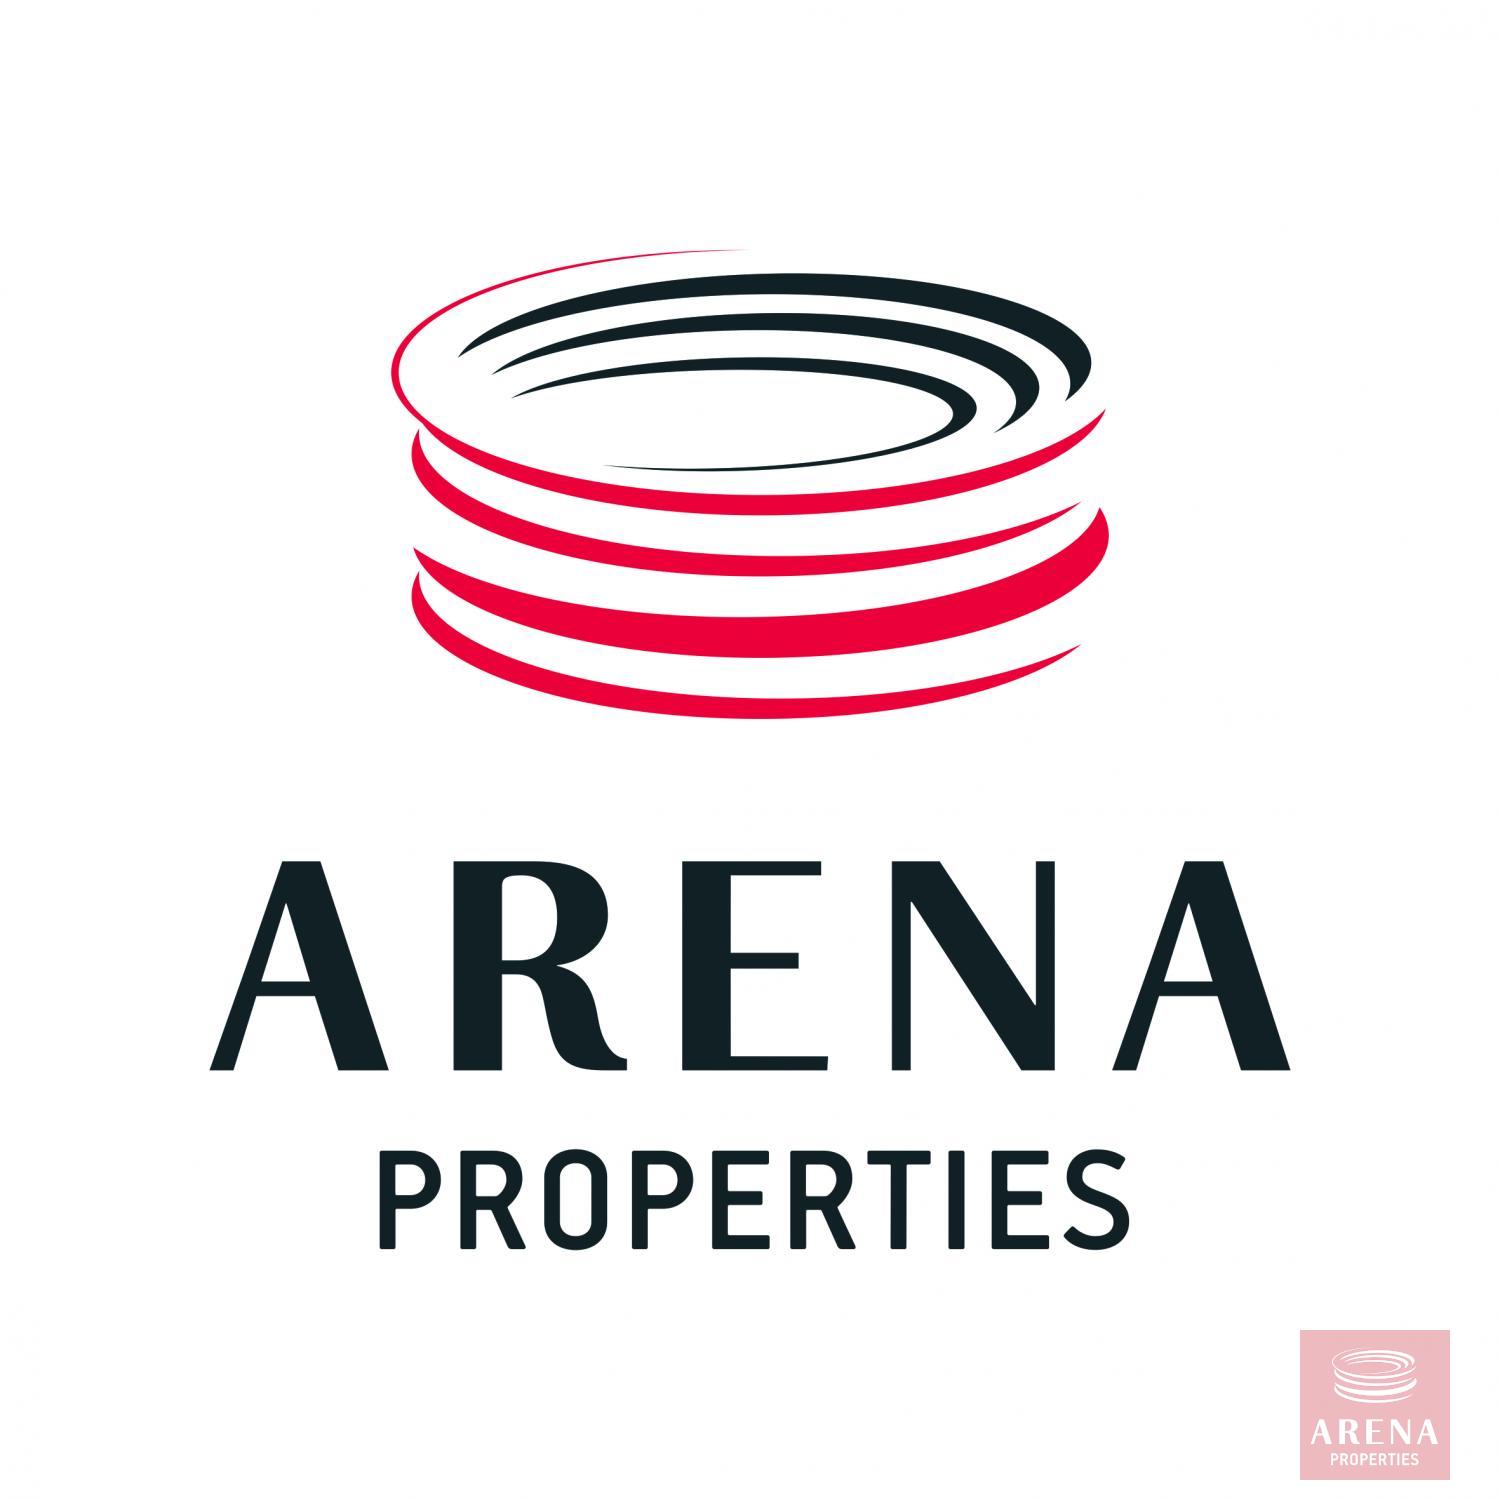 arena properties logo white 9